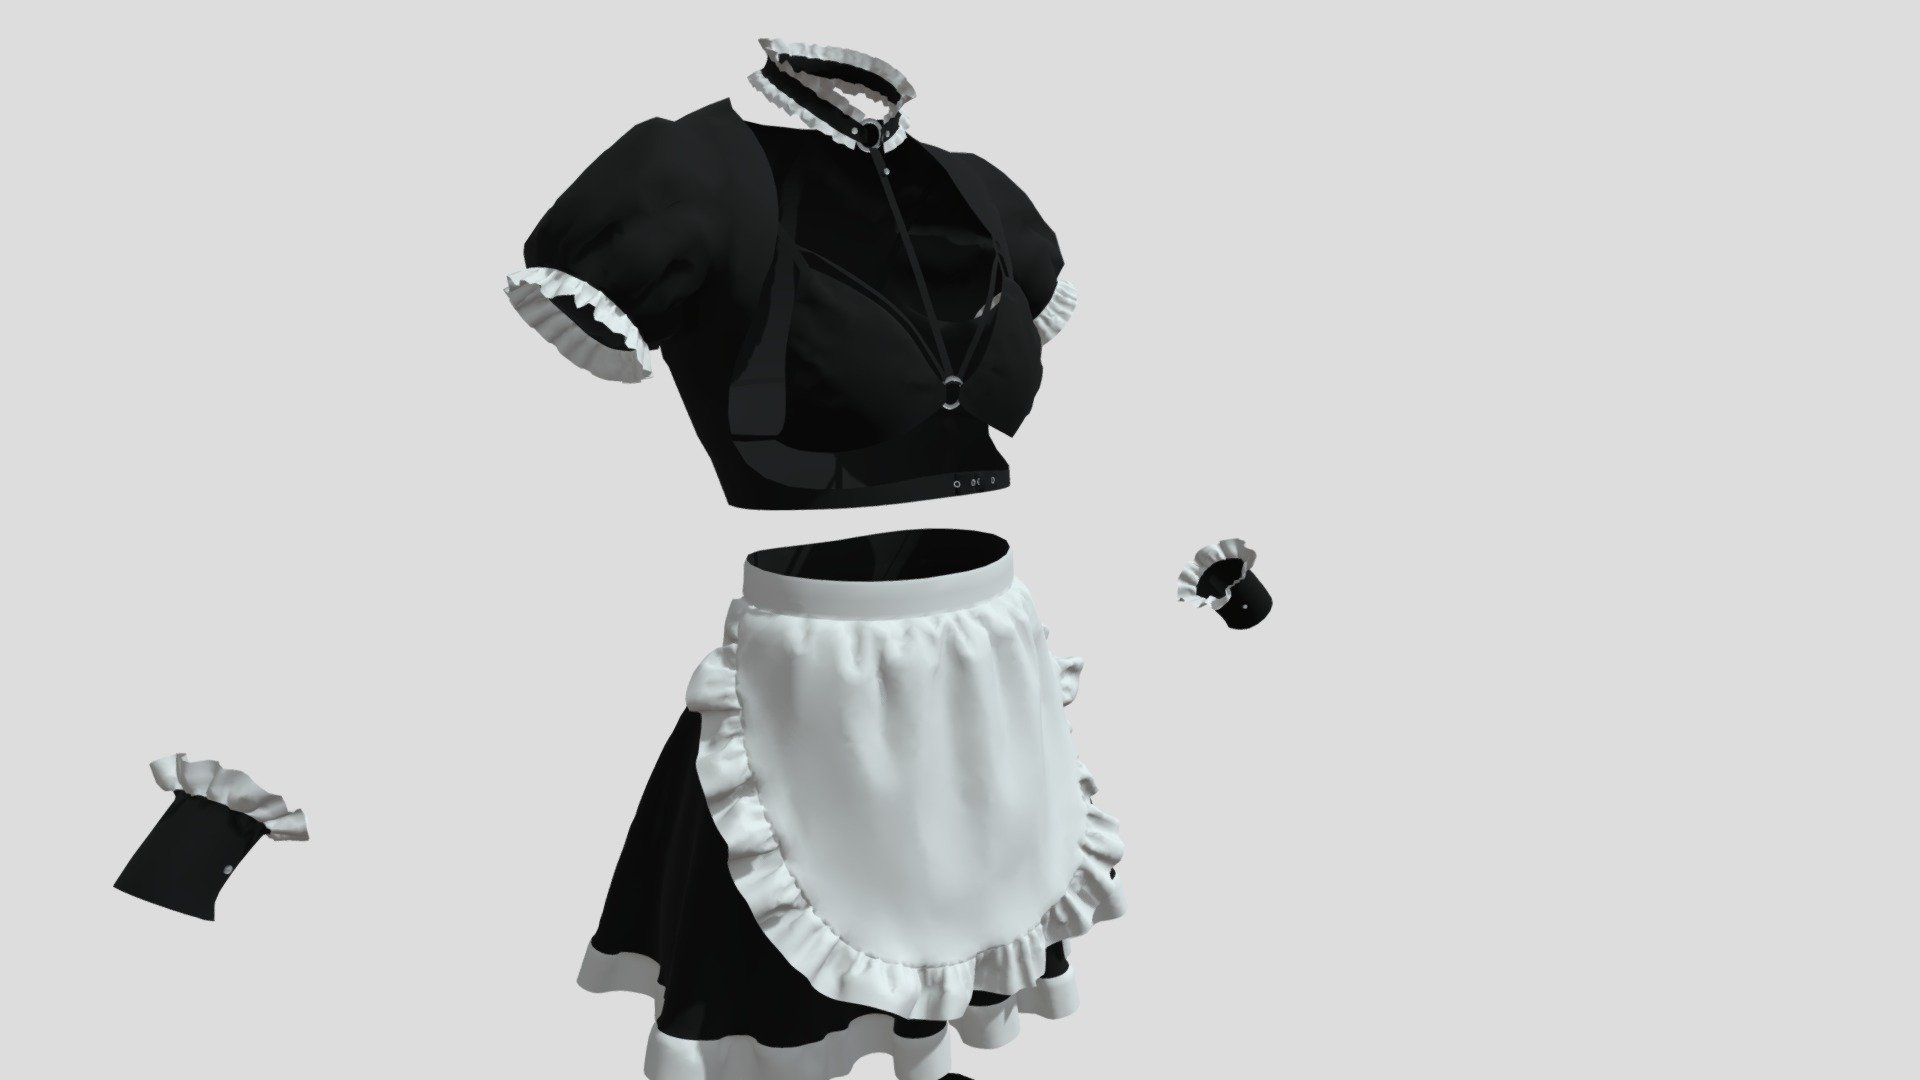 3D model Underwear Marvelous Designer CLO project VR / AR / low-poly